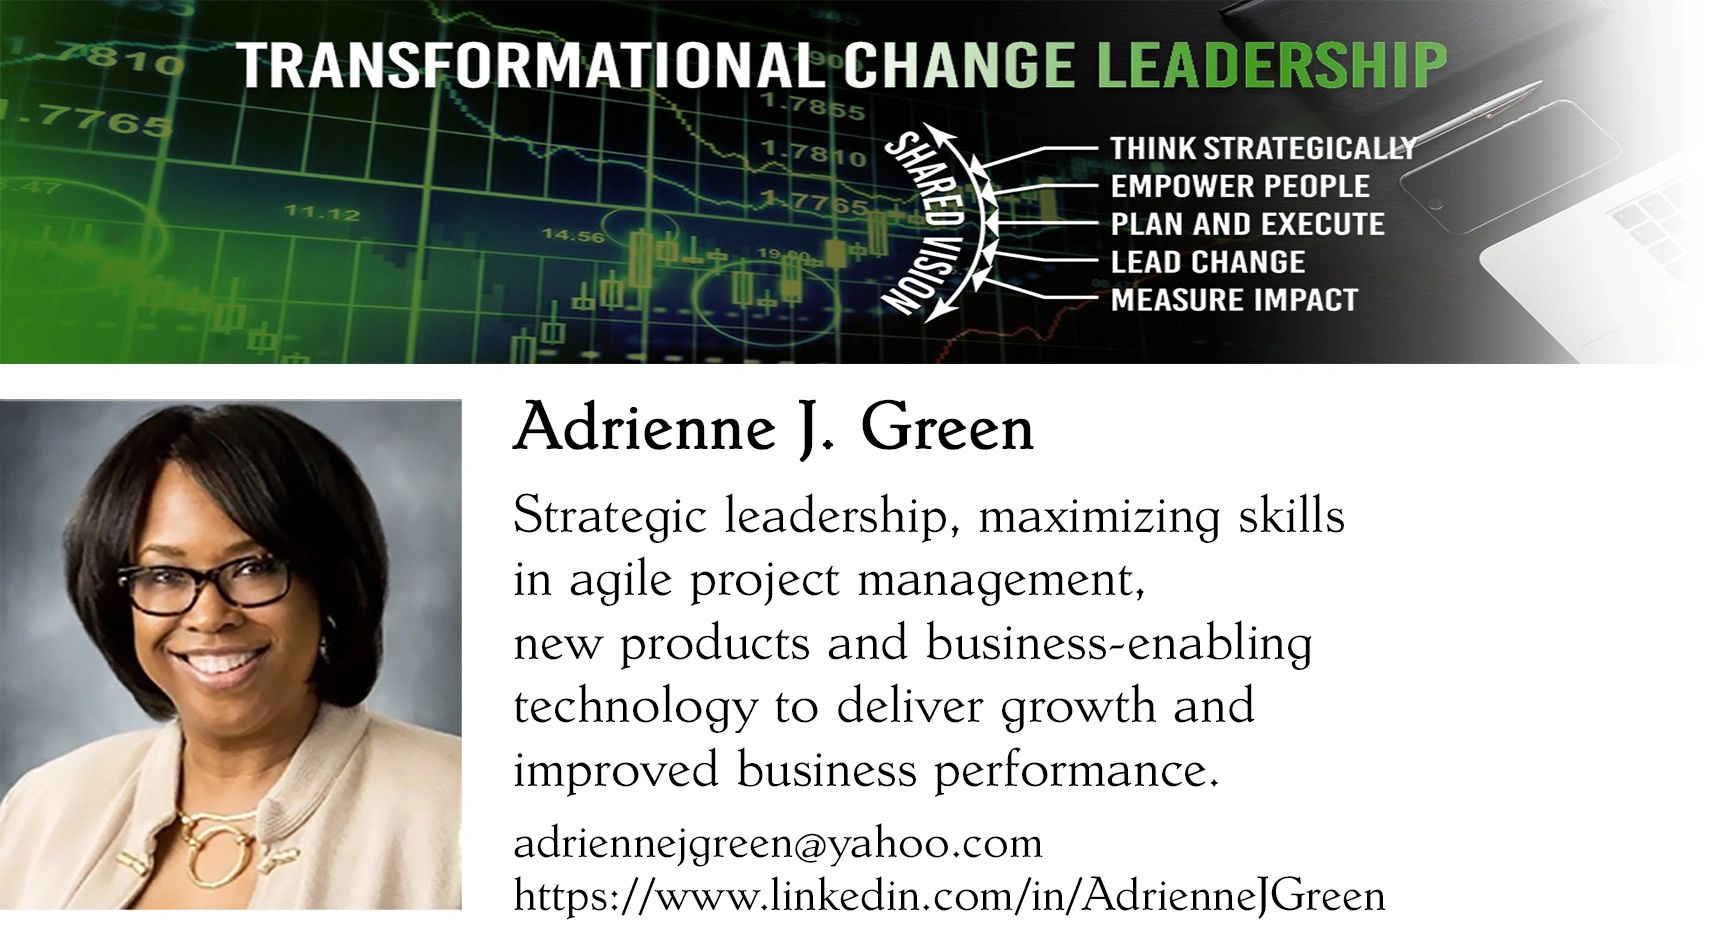 Strategic leadership, maximizing skills, agile project management, business-enabling technology 